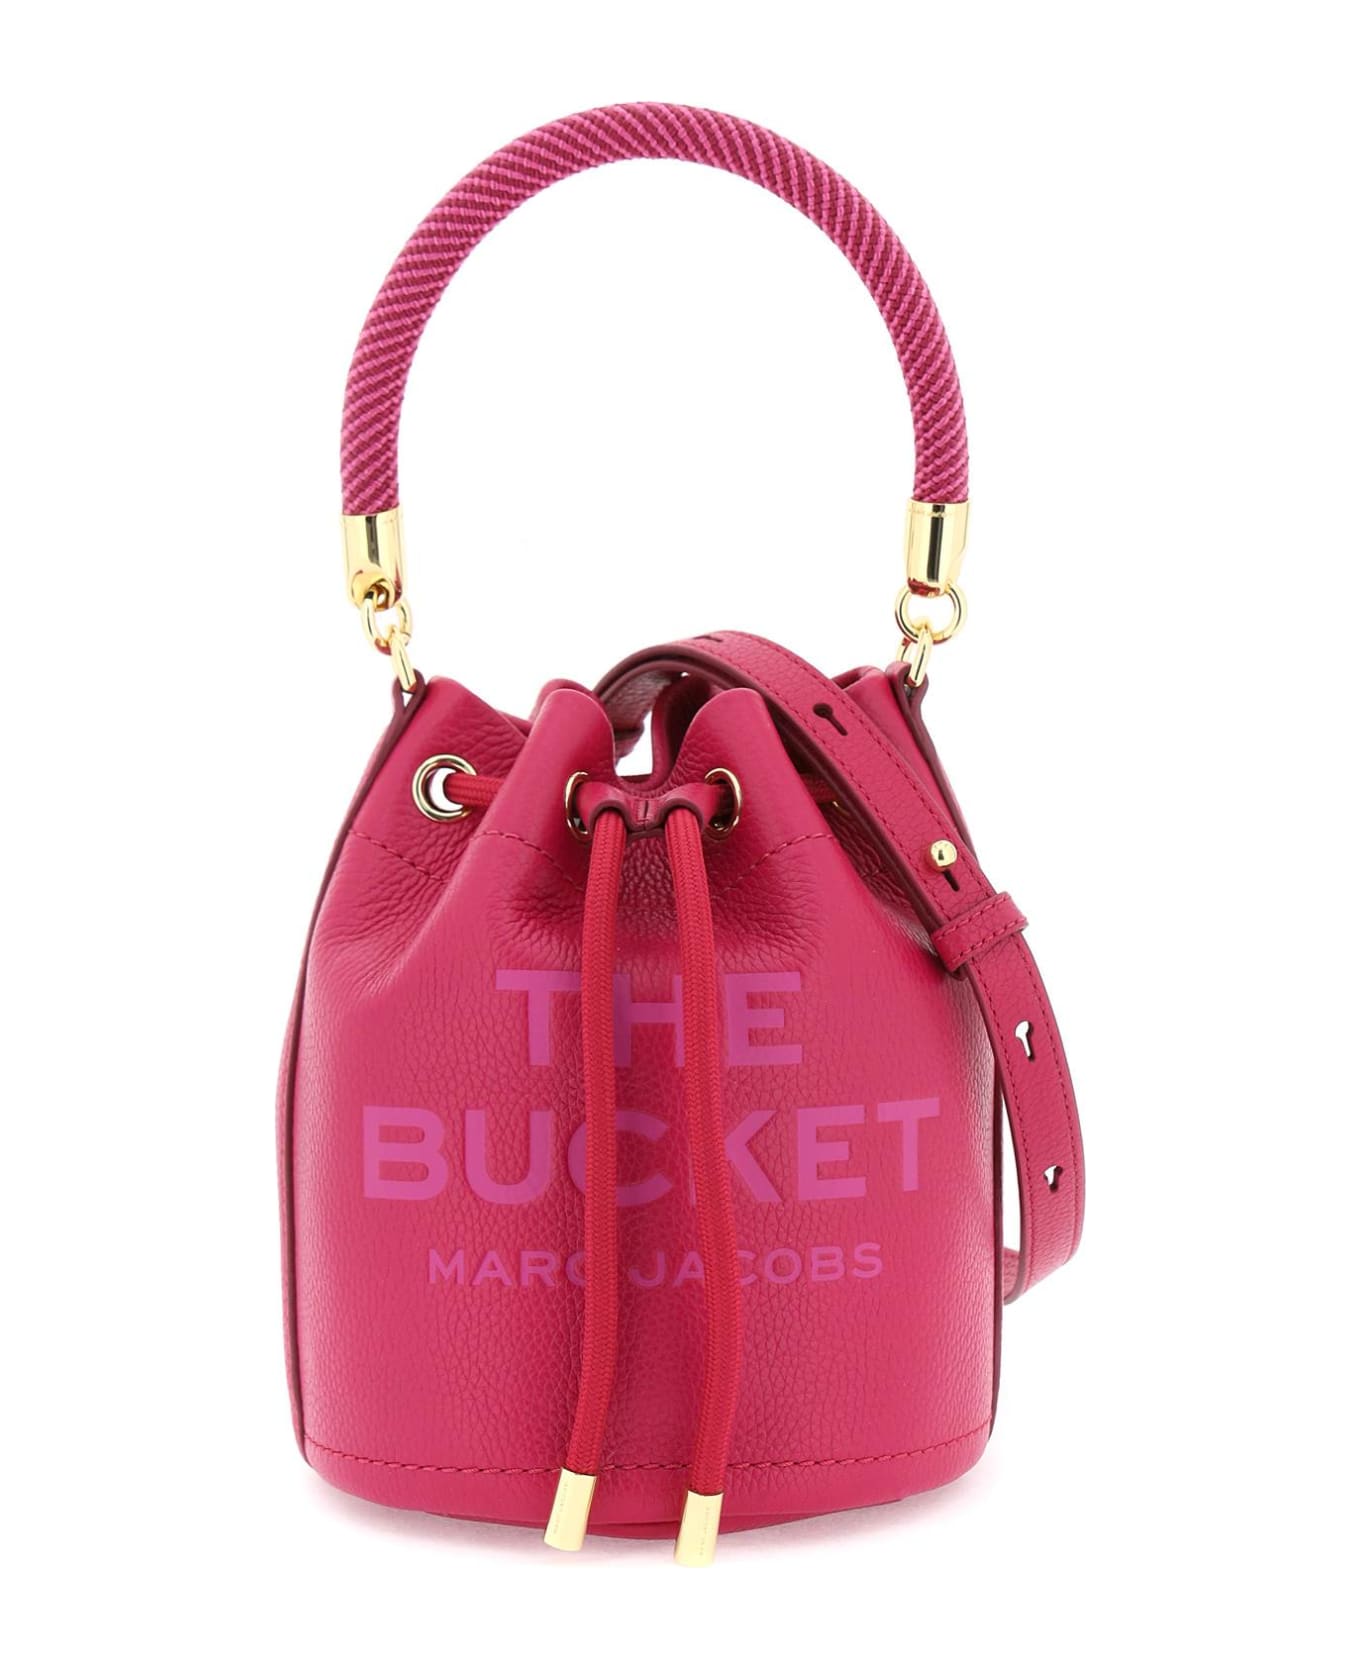 Marc Jacobs The Bucket Bag - Lipstick